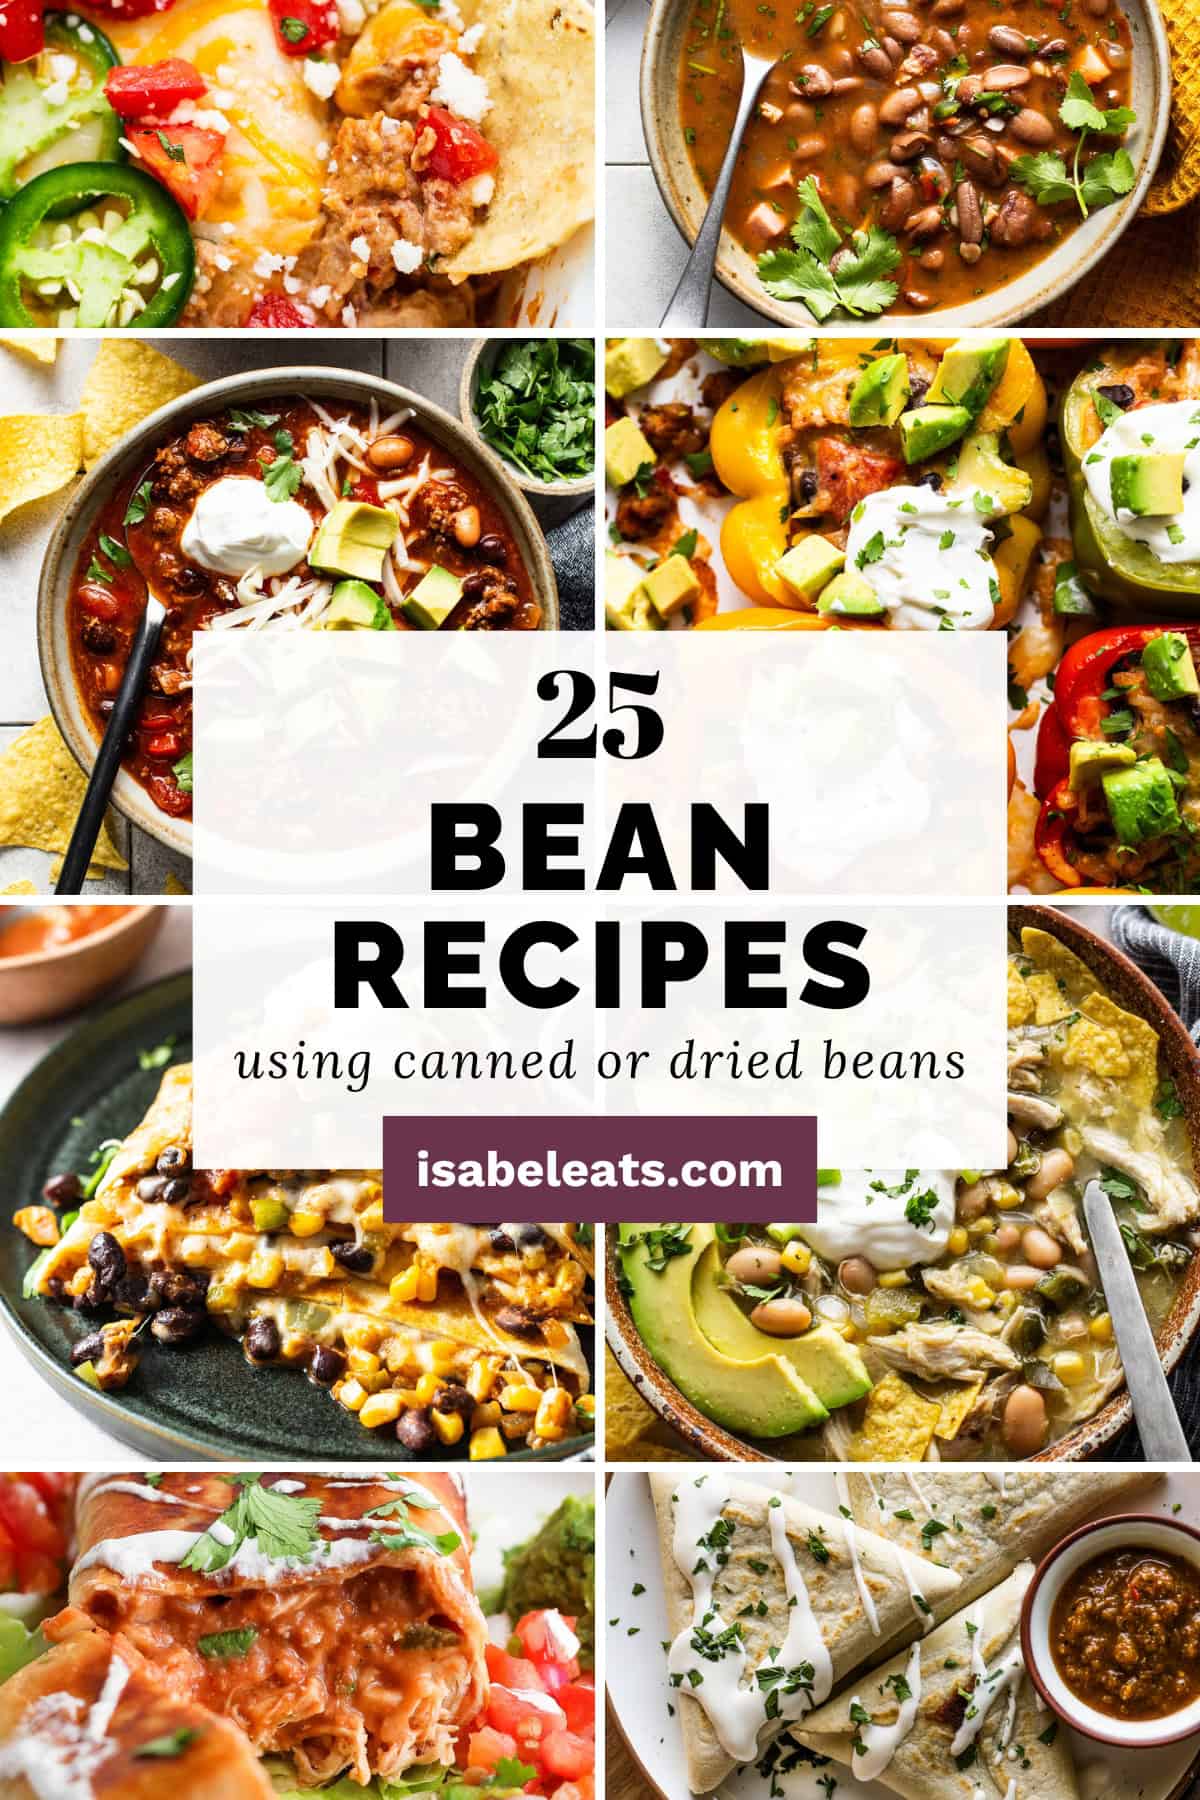 Bean Recipes to Make